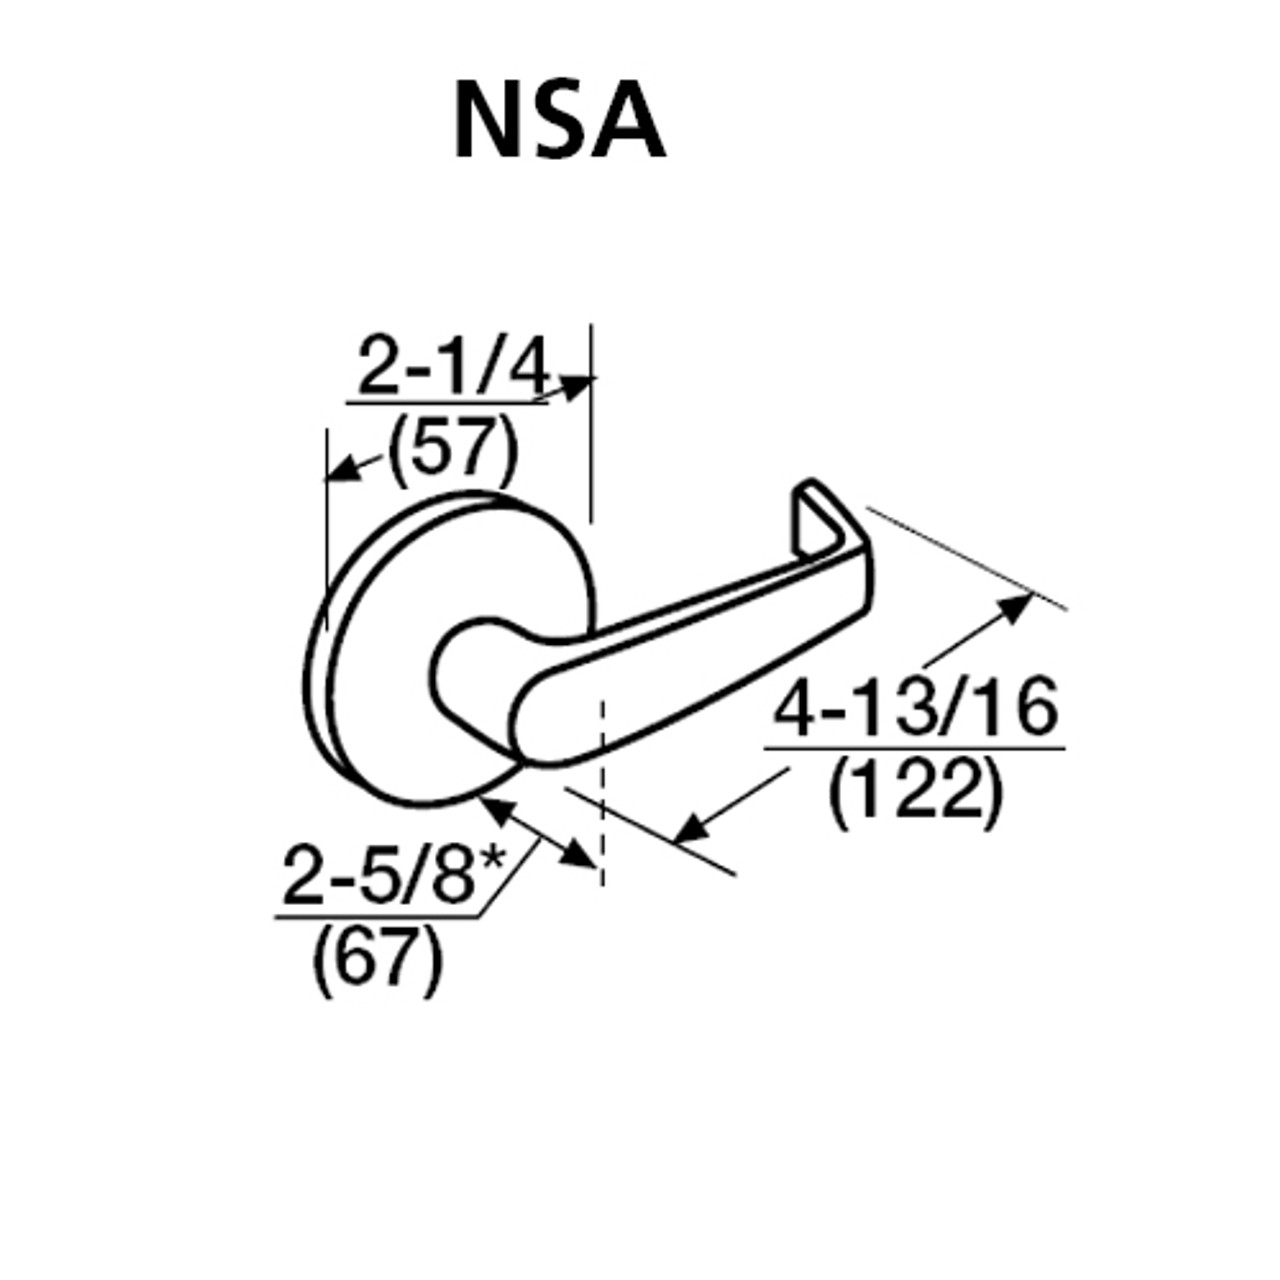 ML2058-NSA-626 Corbin Russwin ML2000 Series Mortise Entrance Holdback Locksets with Newport Lever in Satin Chrome